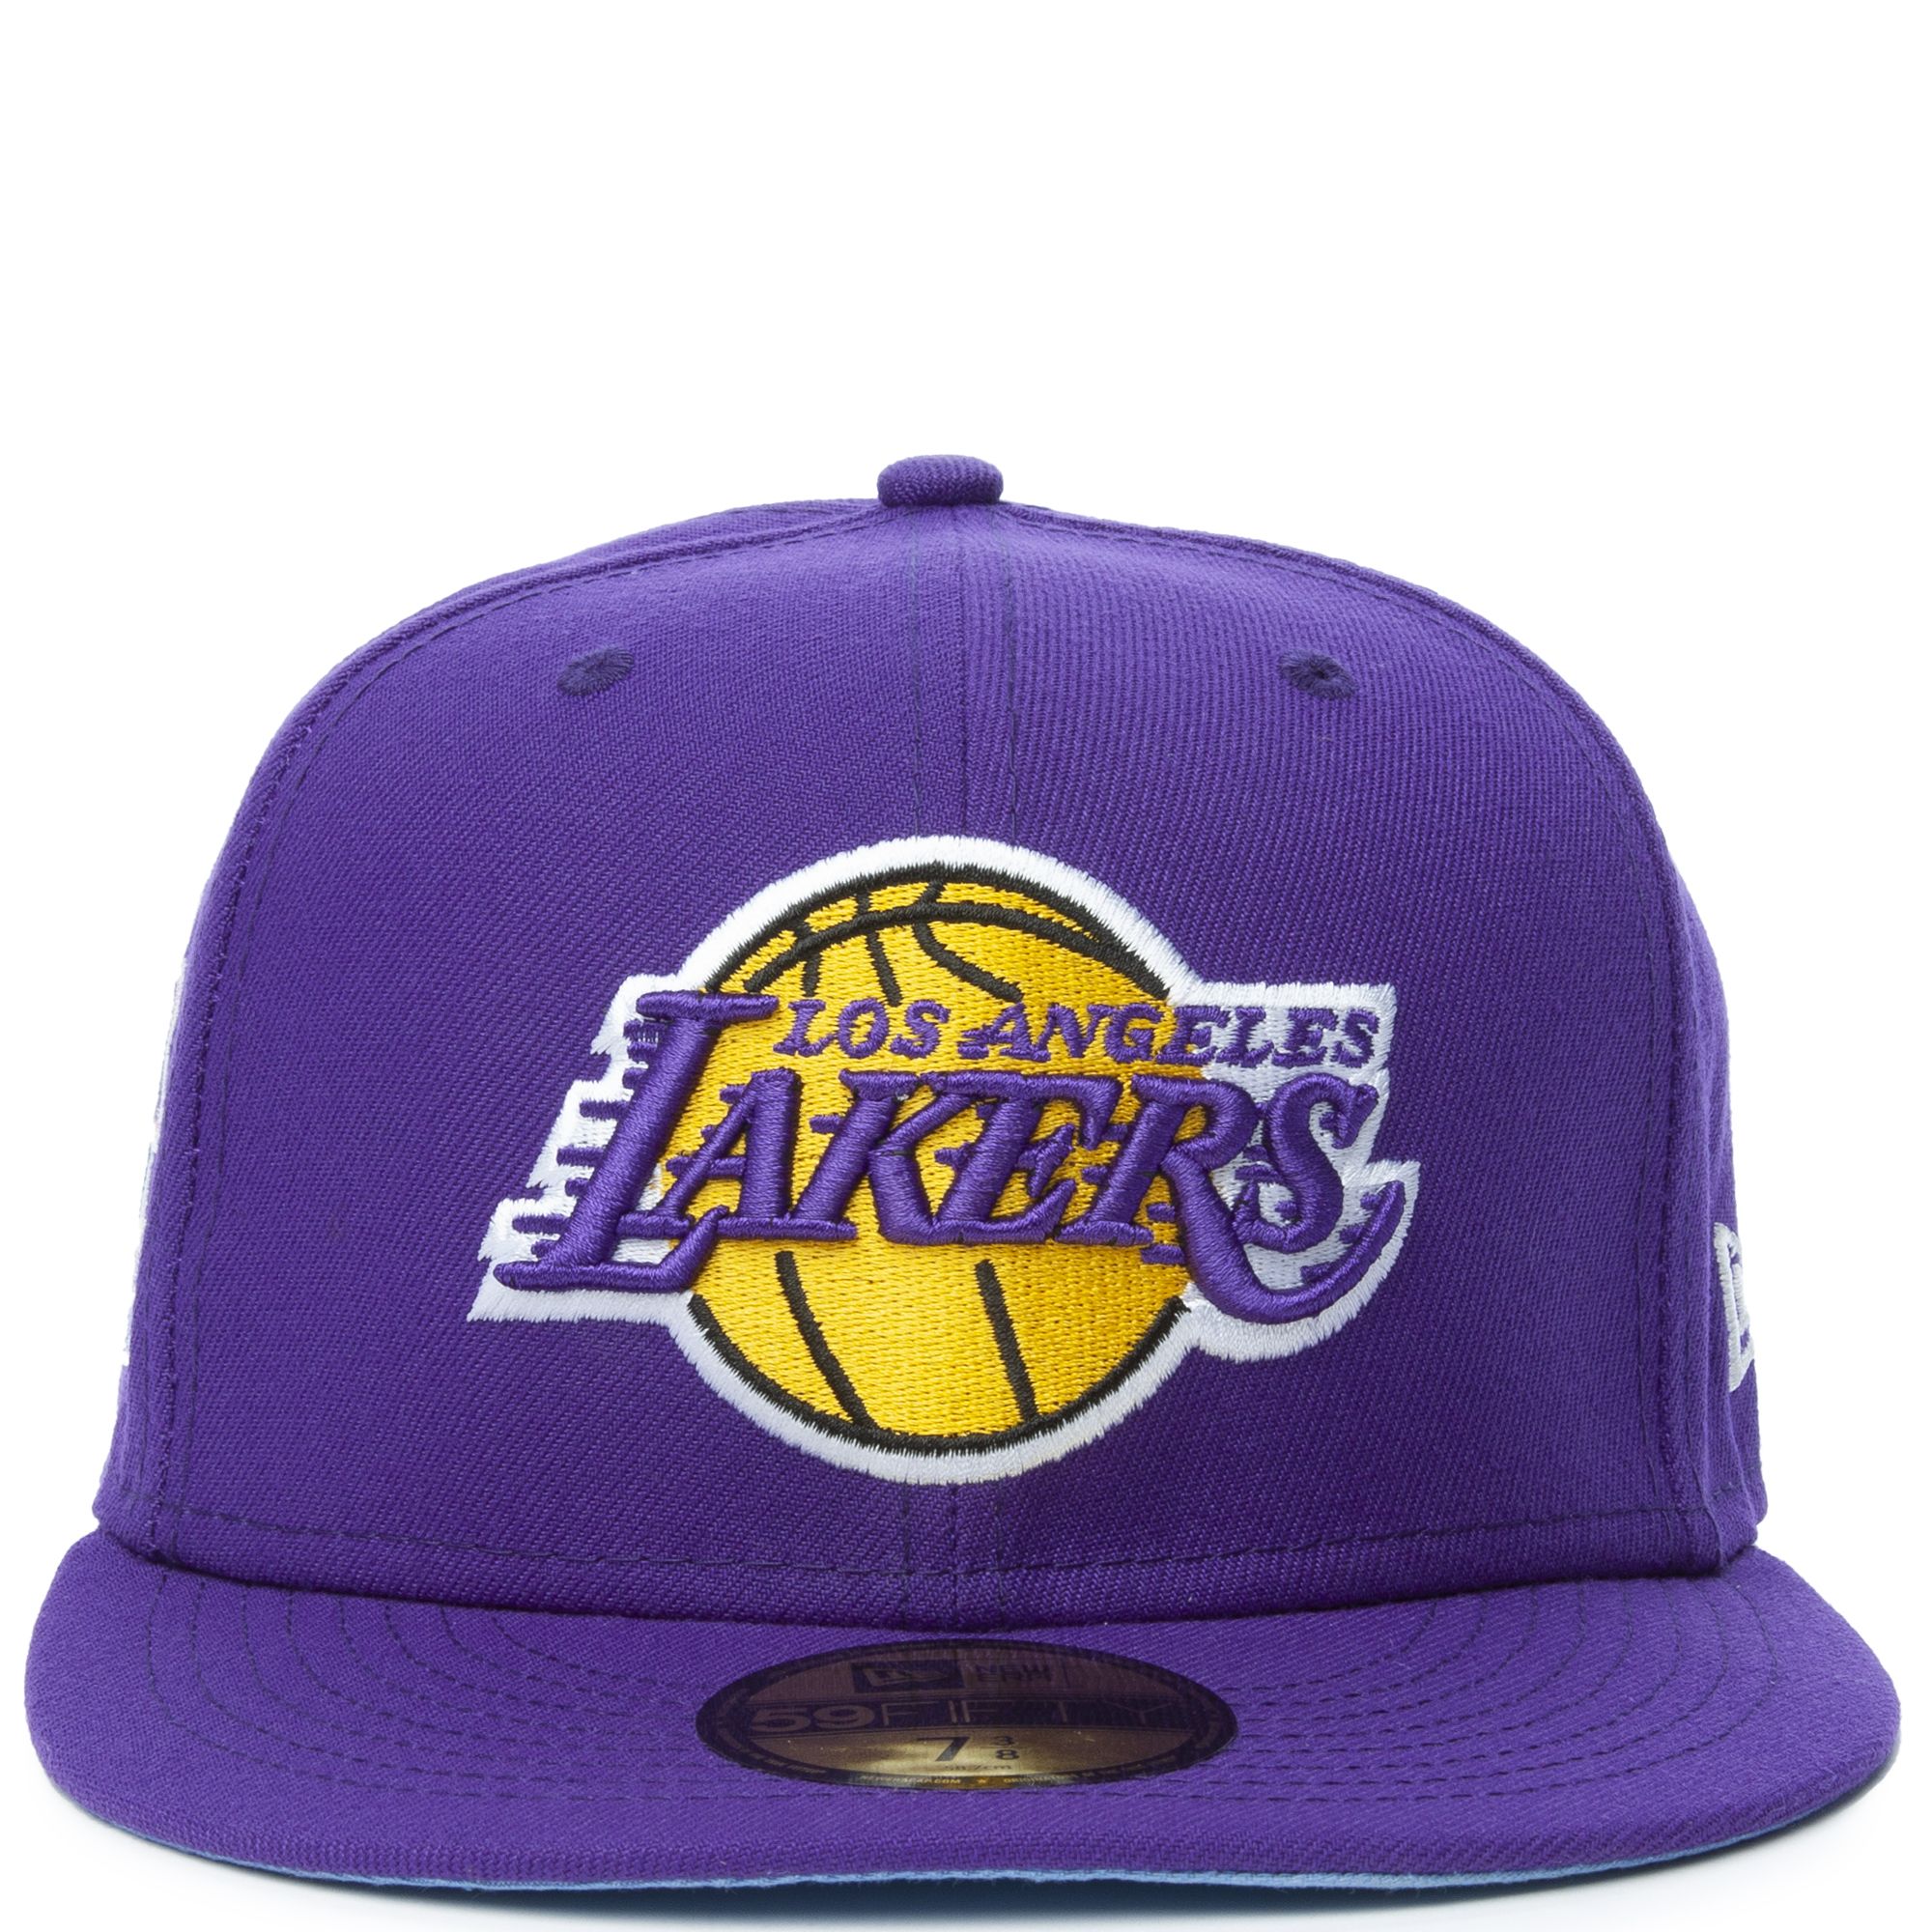 lakers new era hat